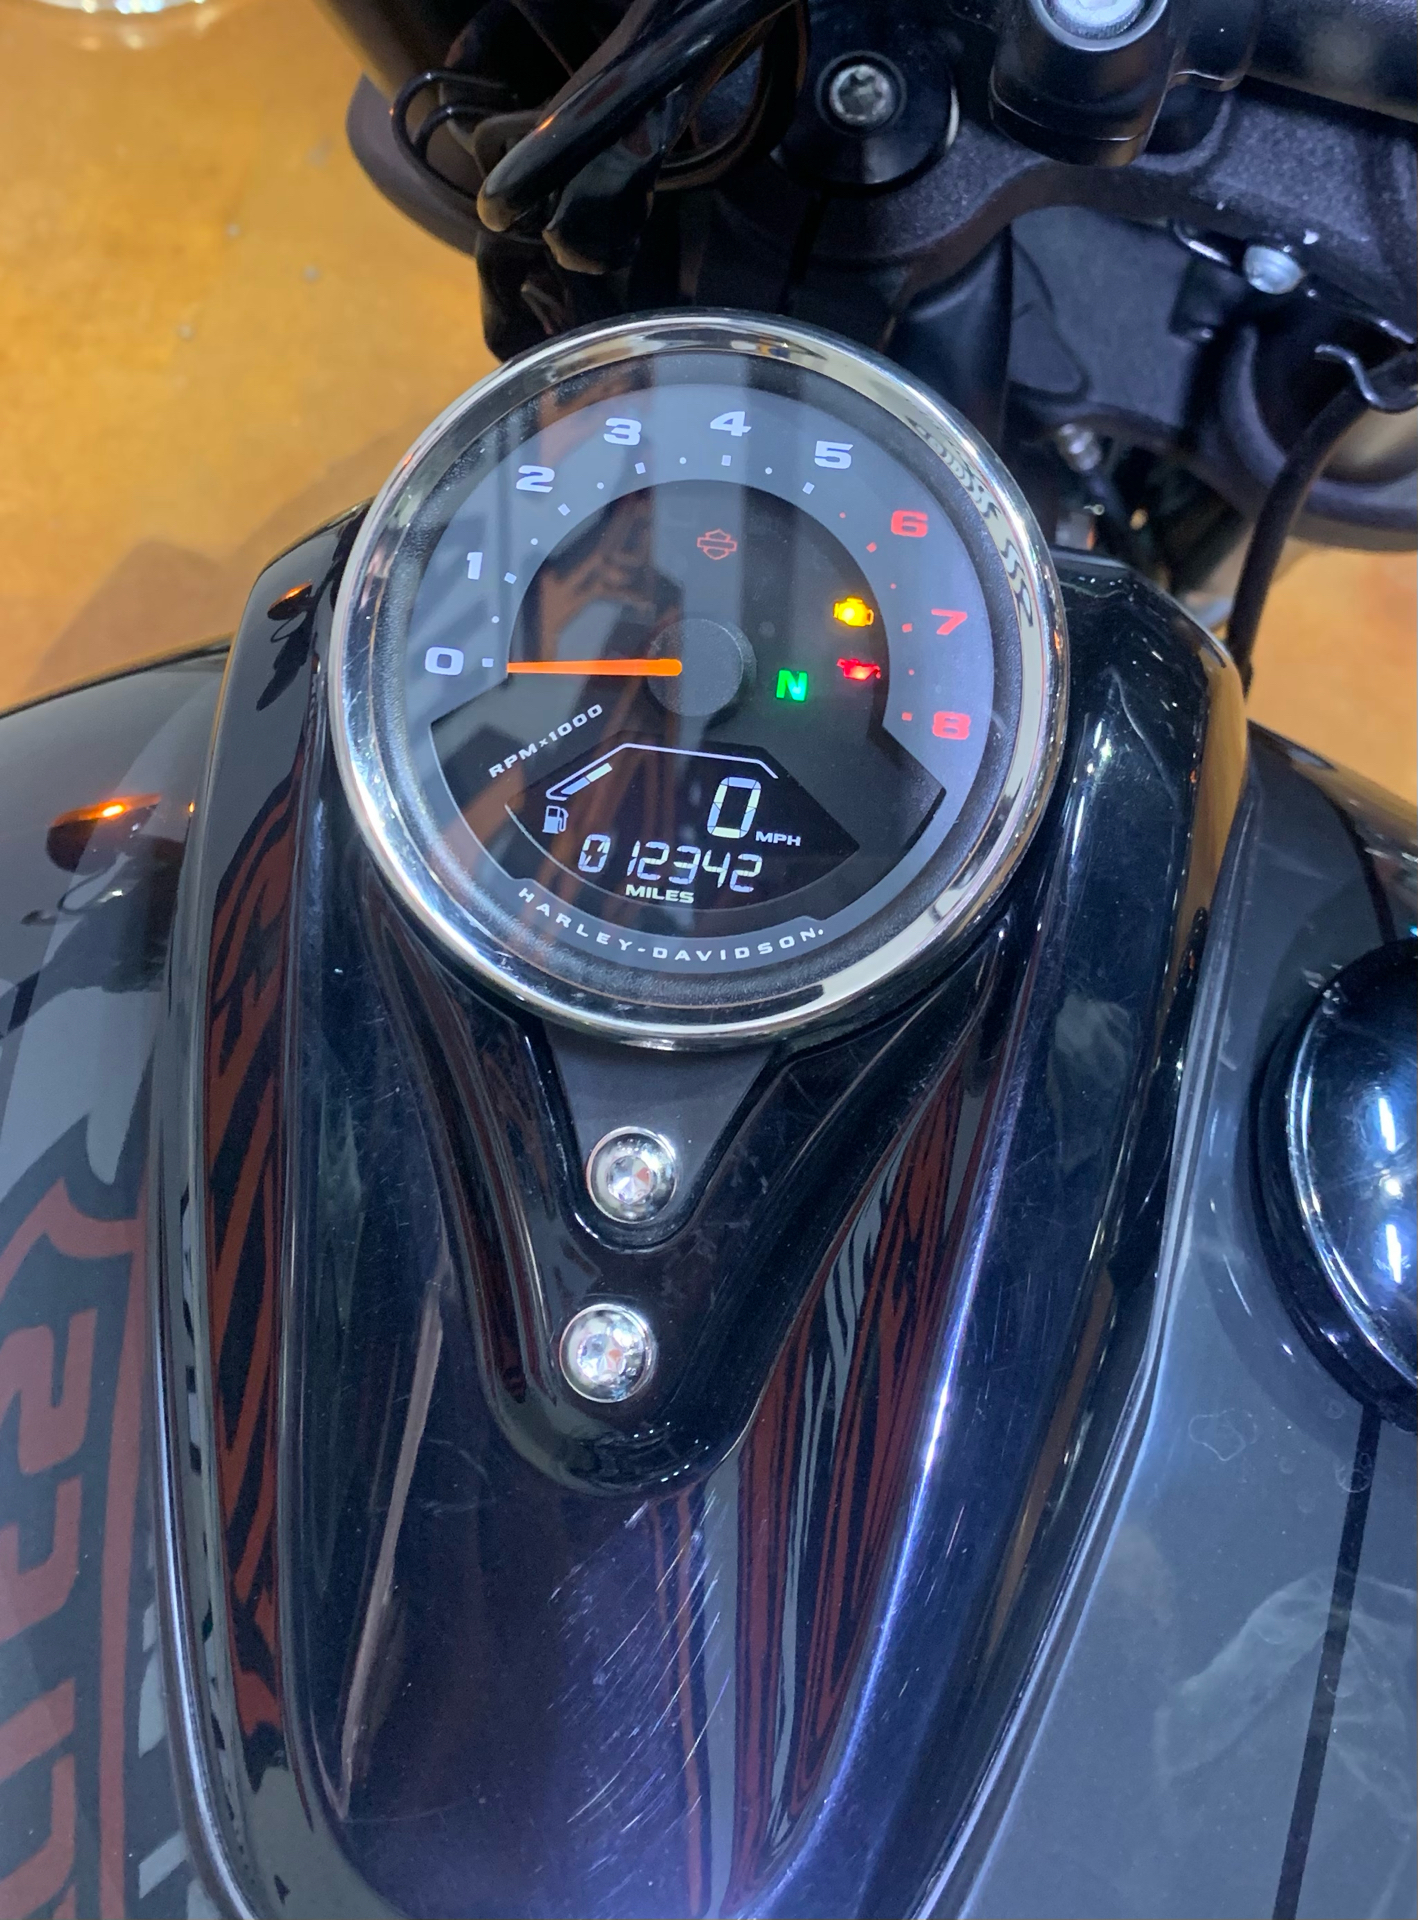 2019 Harley-Davidson Fat Bob low mileage - Photo 6